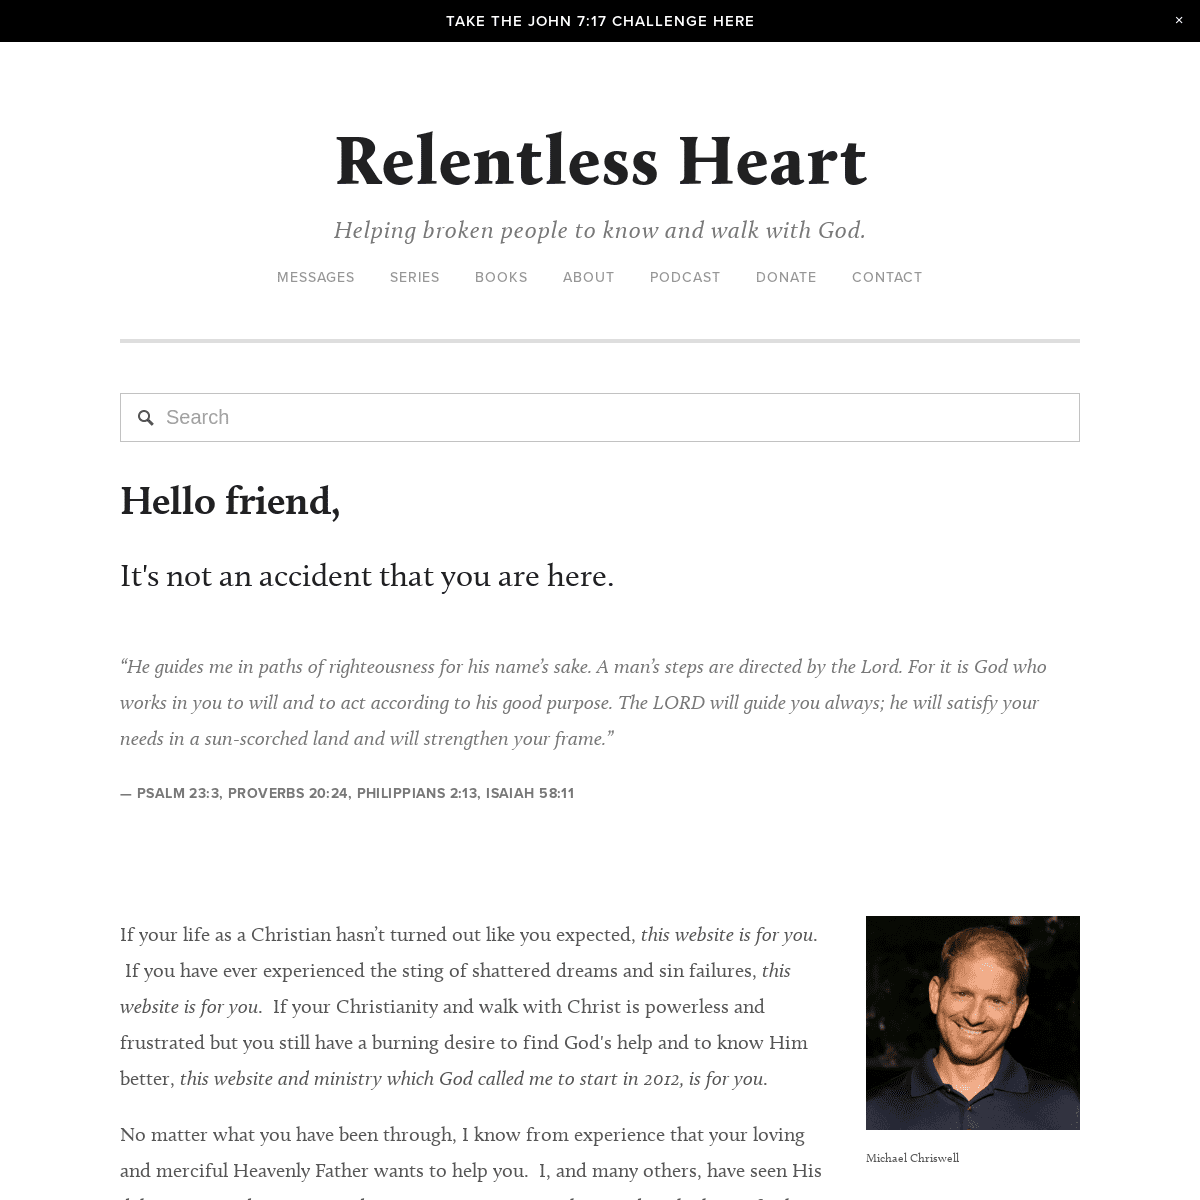 A complete backup of relentlessheart.com